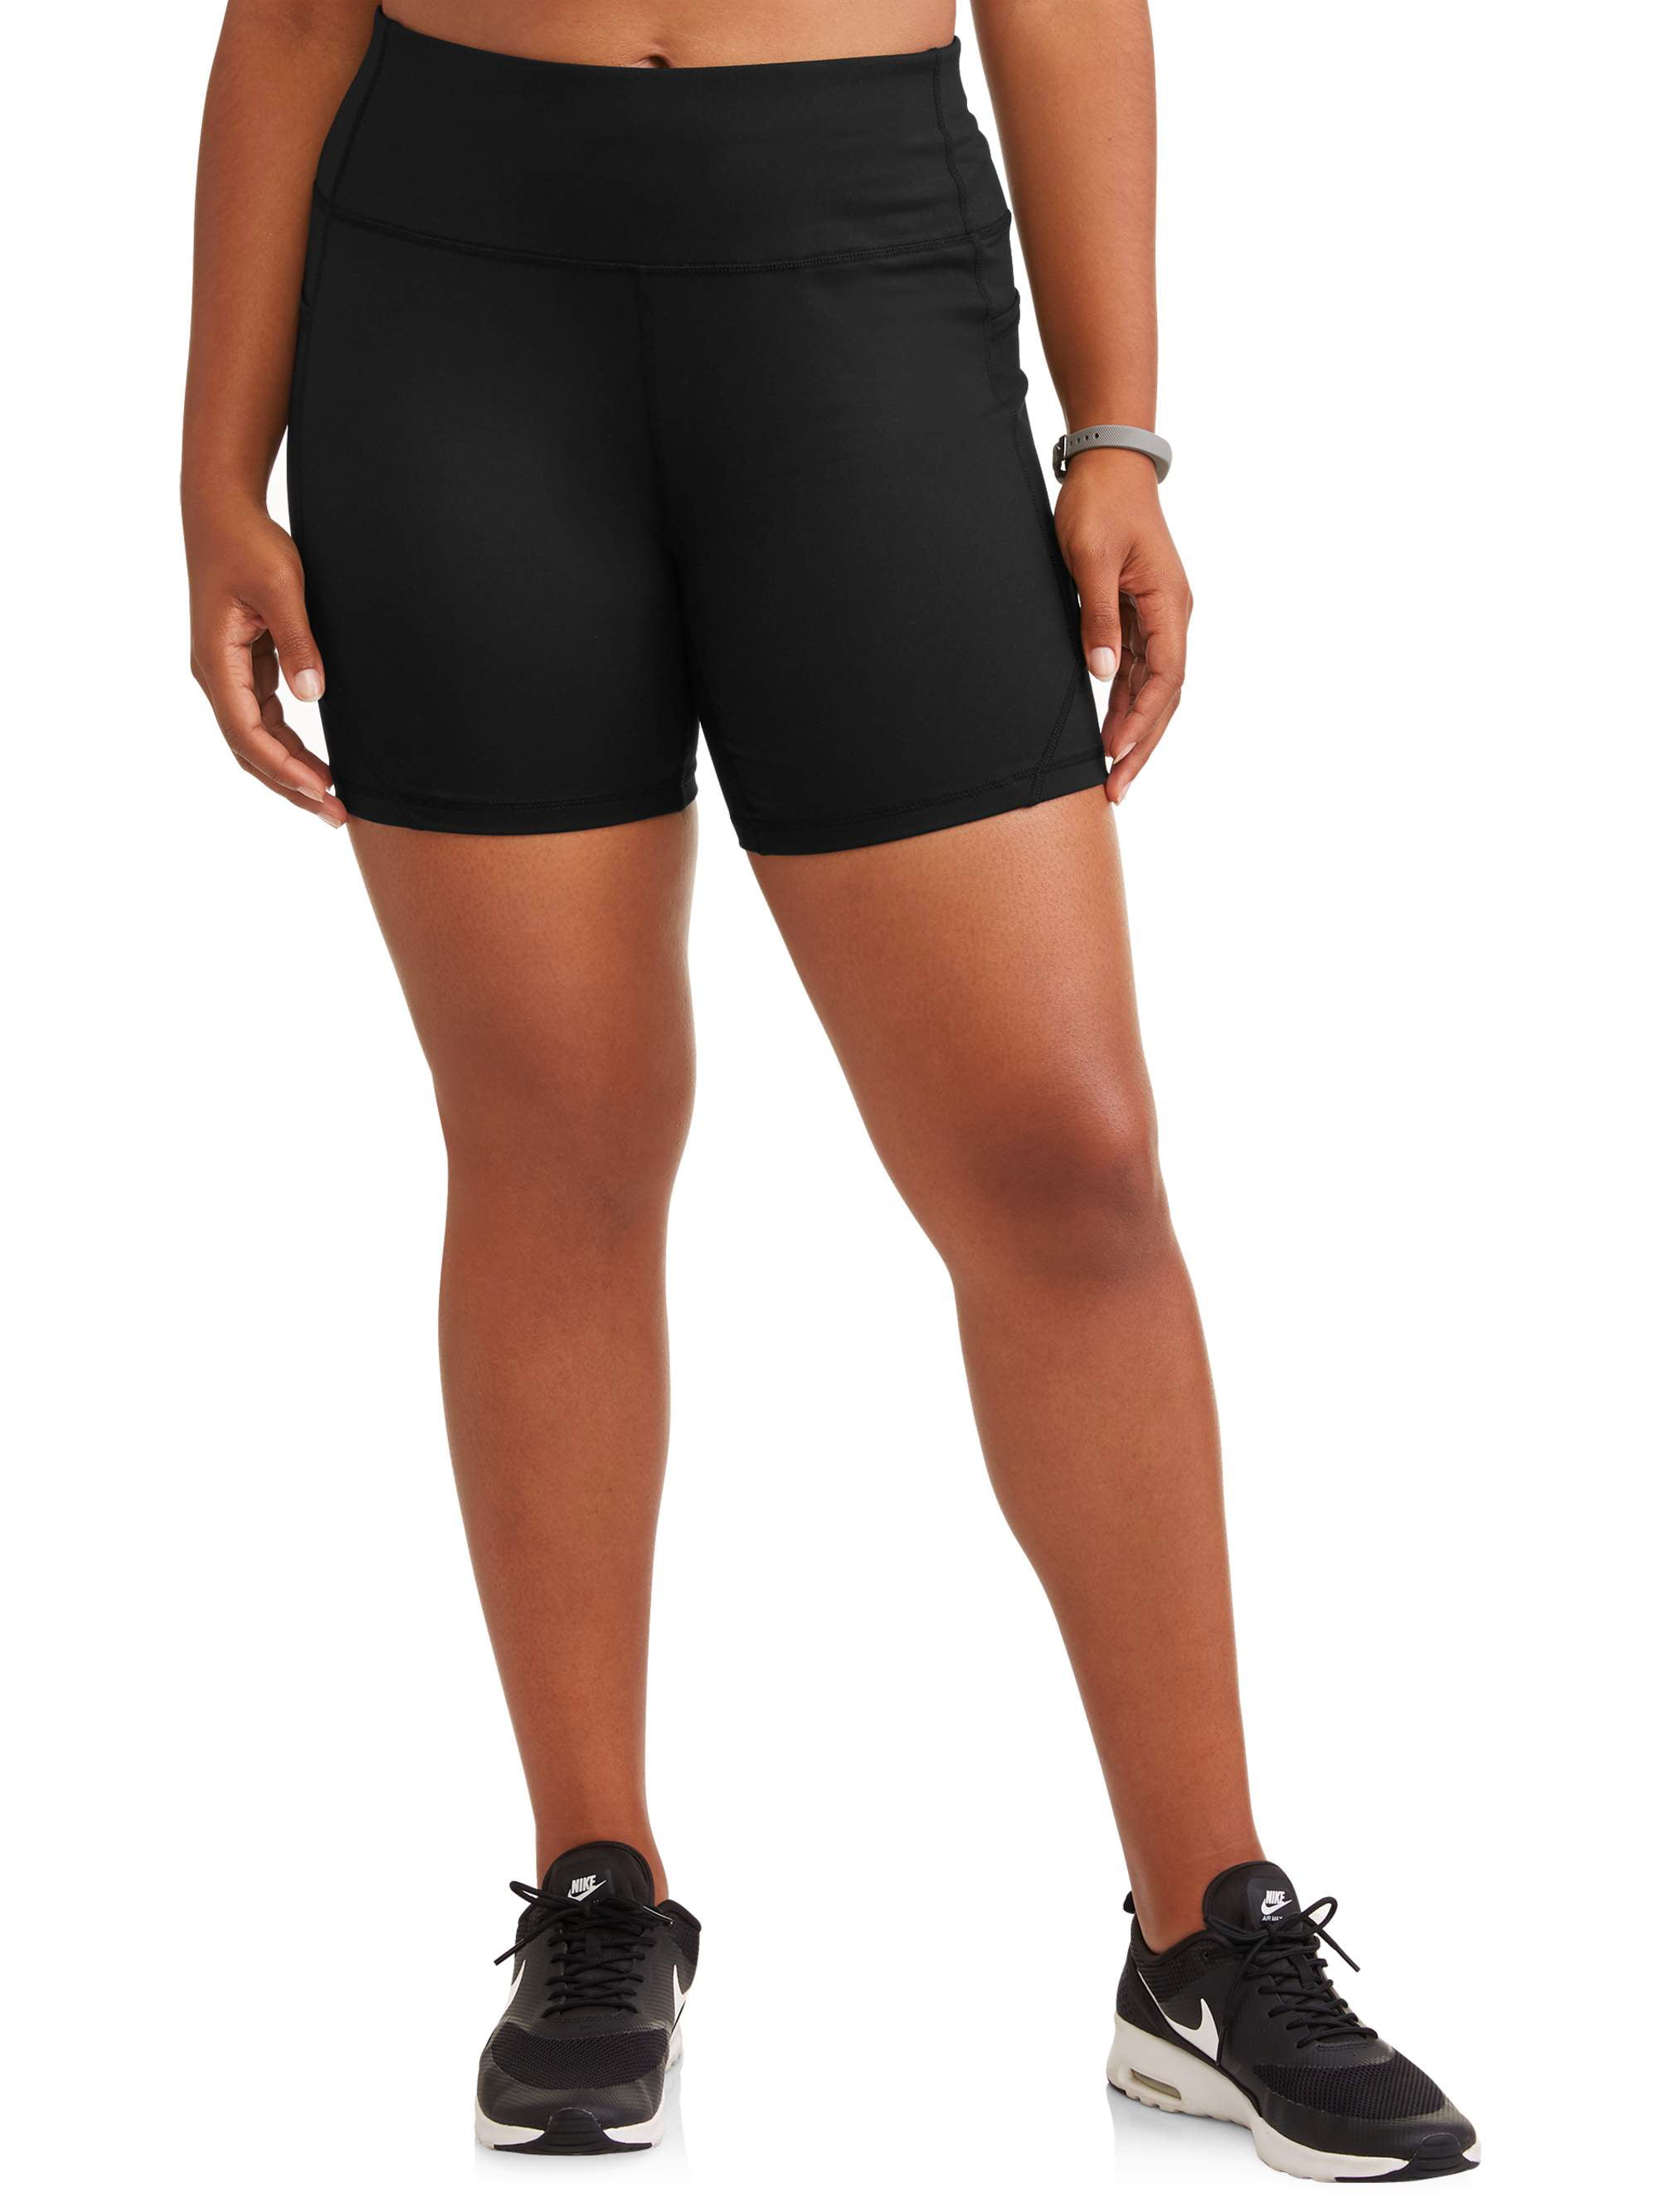 Women's Plus Active Circuit Shorts 7 inch inseam - Walmart.com